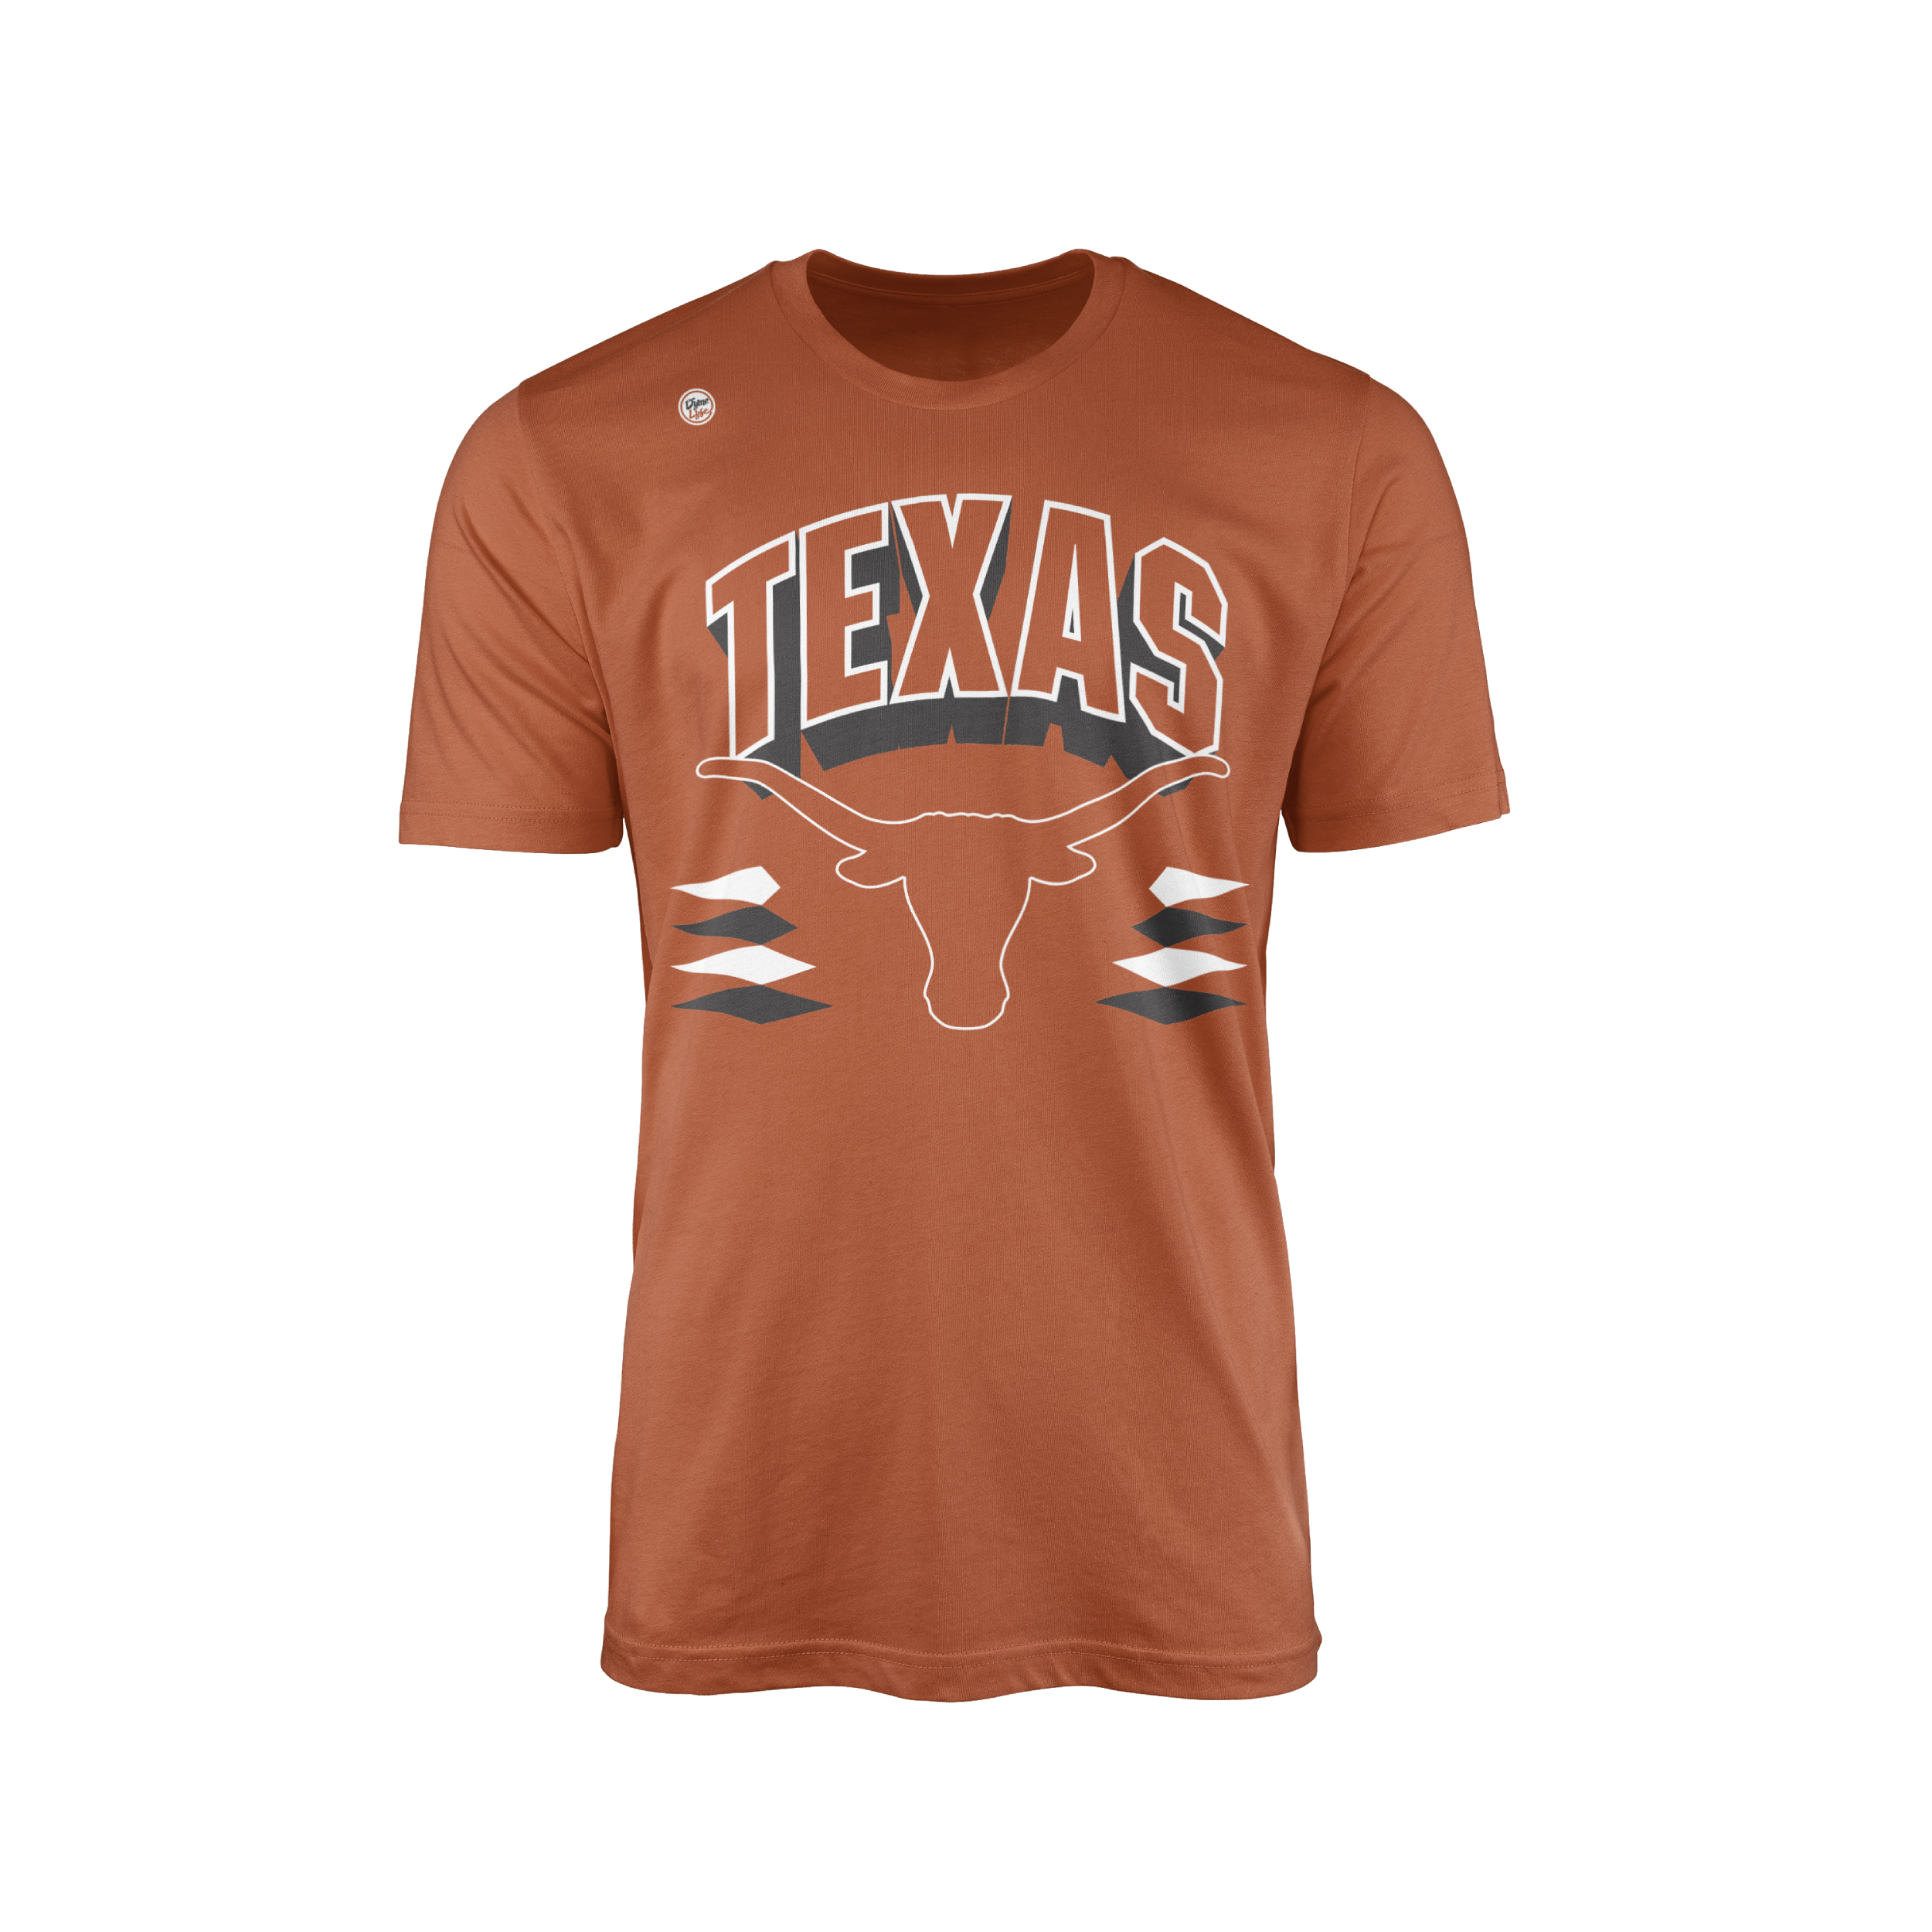 Texas Longhorns Men’s Retro Tee